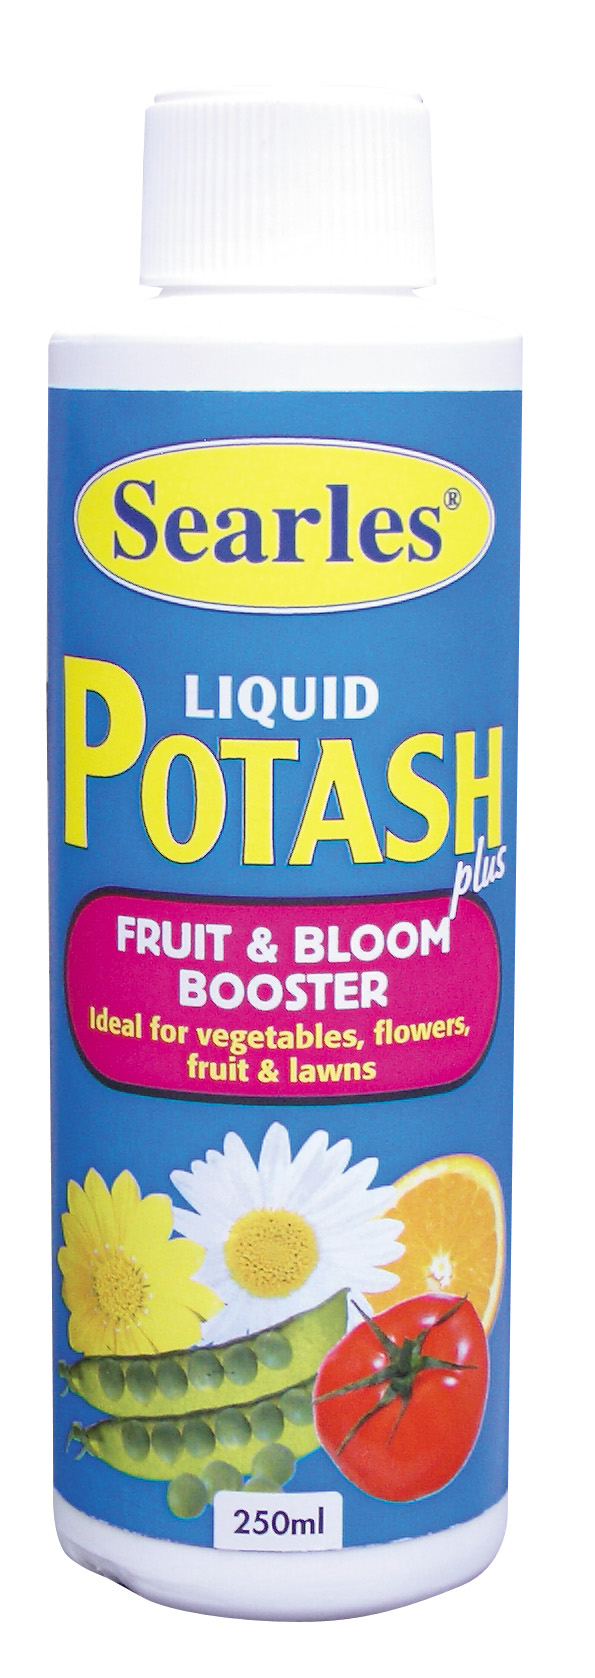 Searles Liquid Potash Plus 250mL